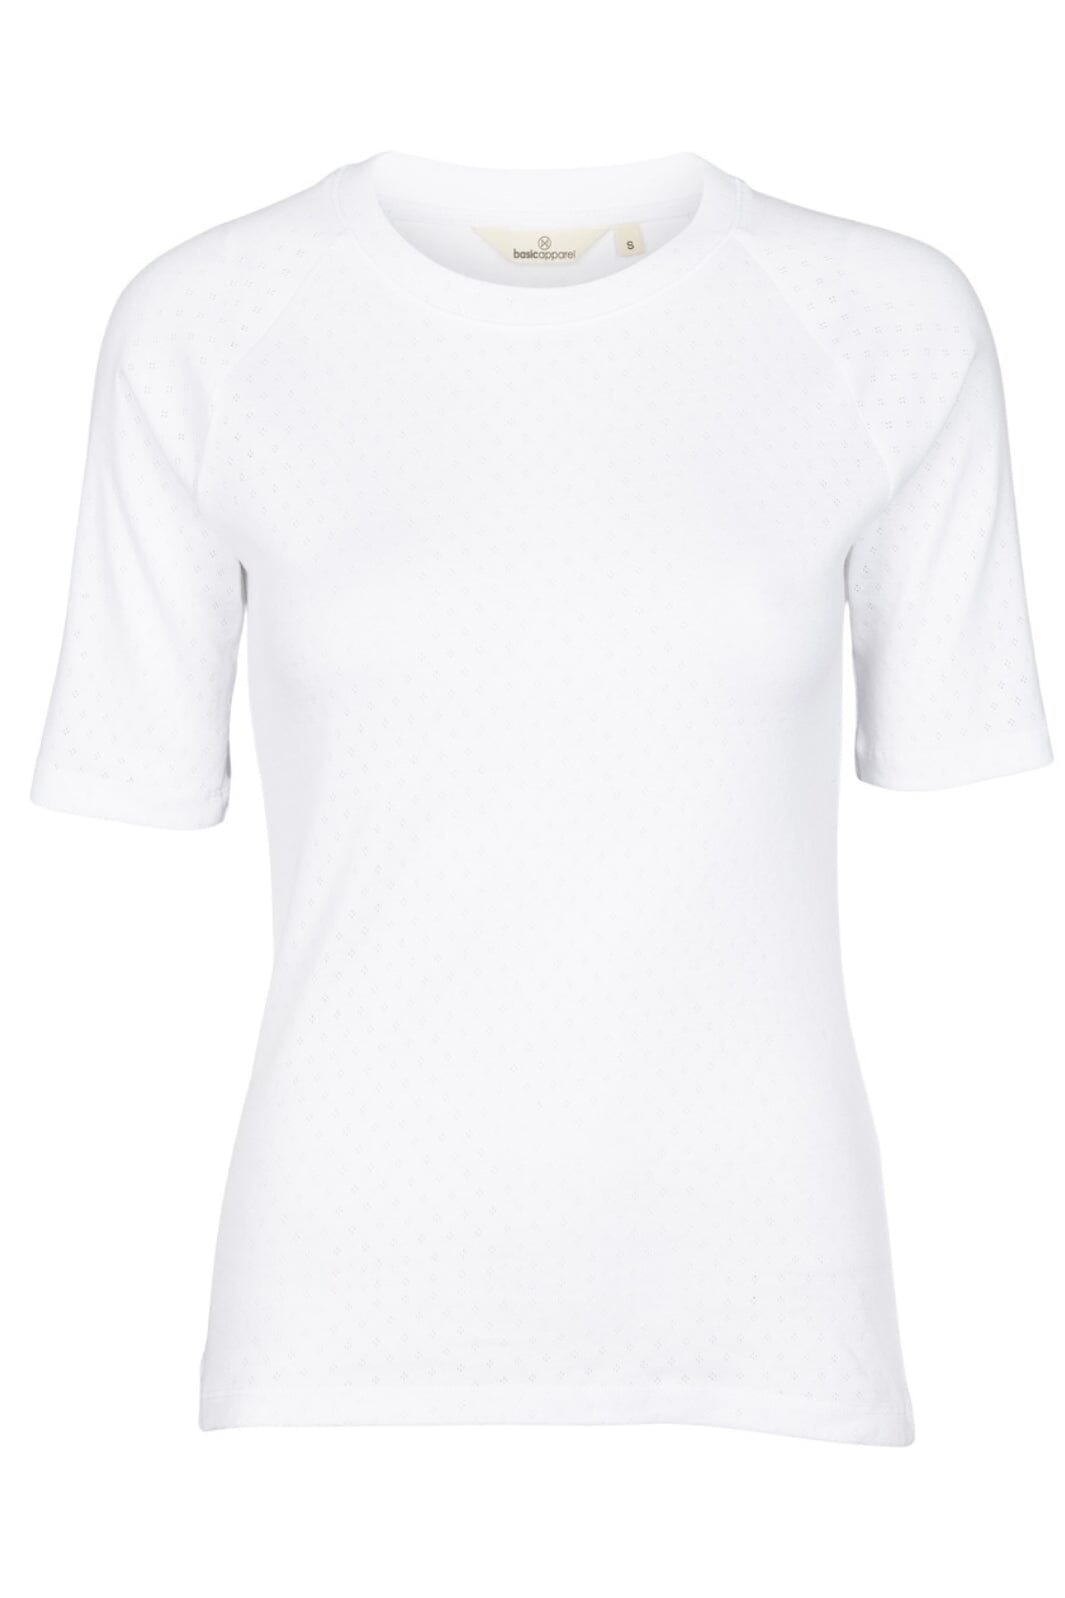 Basic Apparel - Arense Tee Gots - 002 White T-shirts 